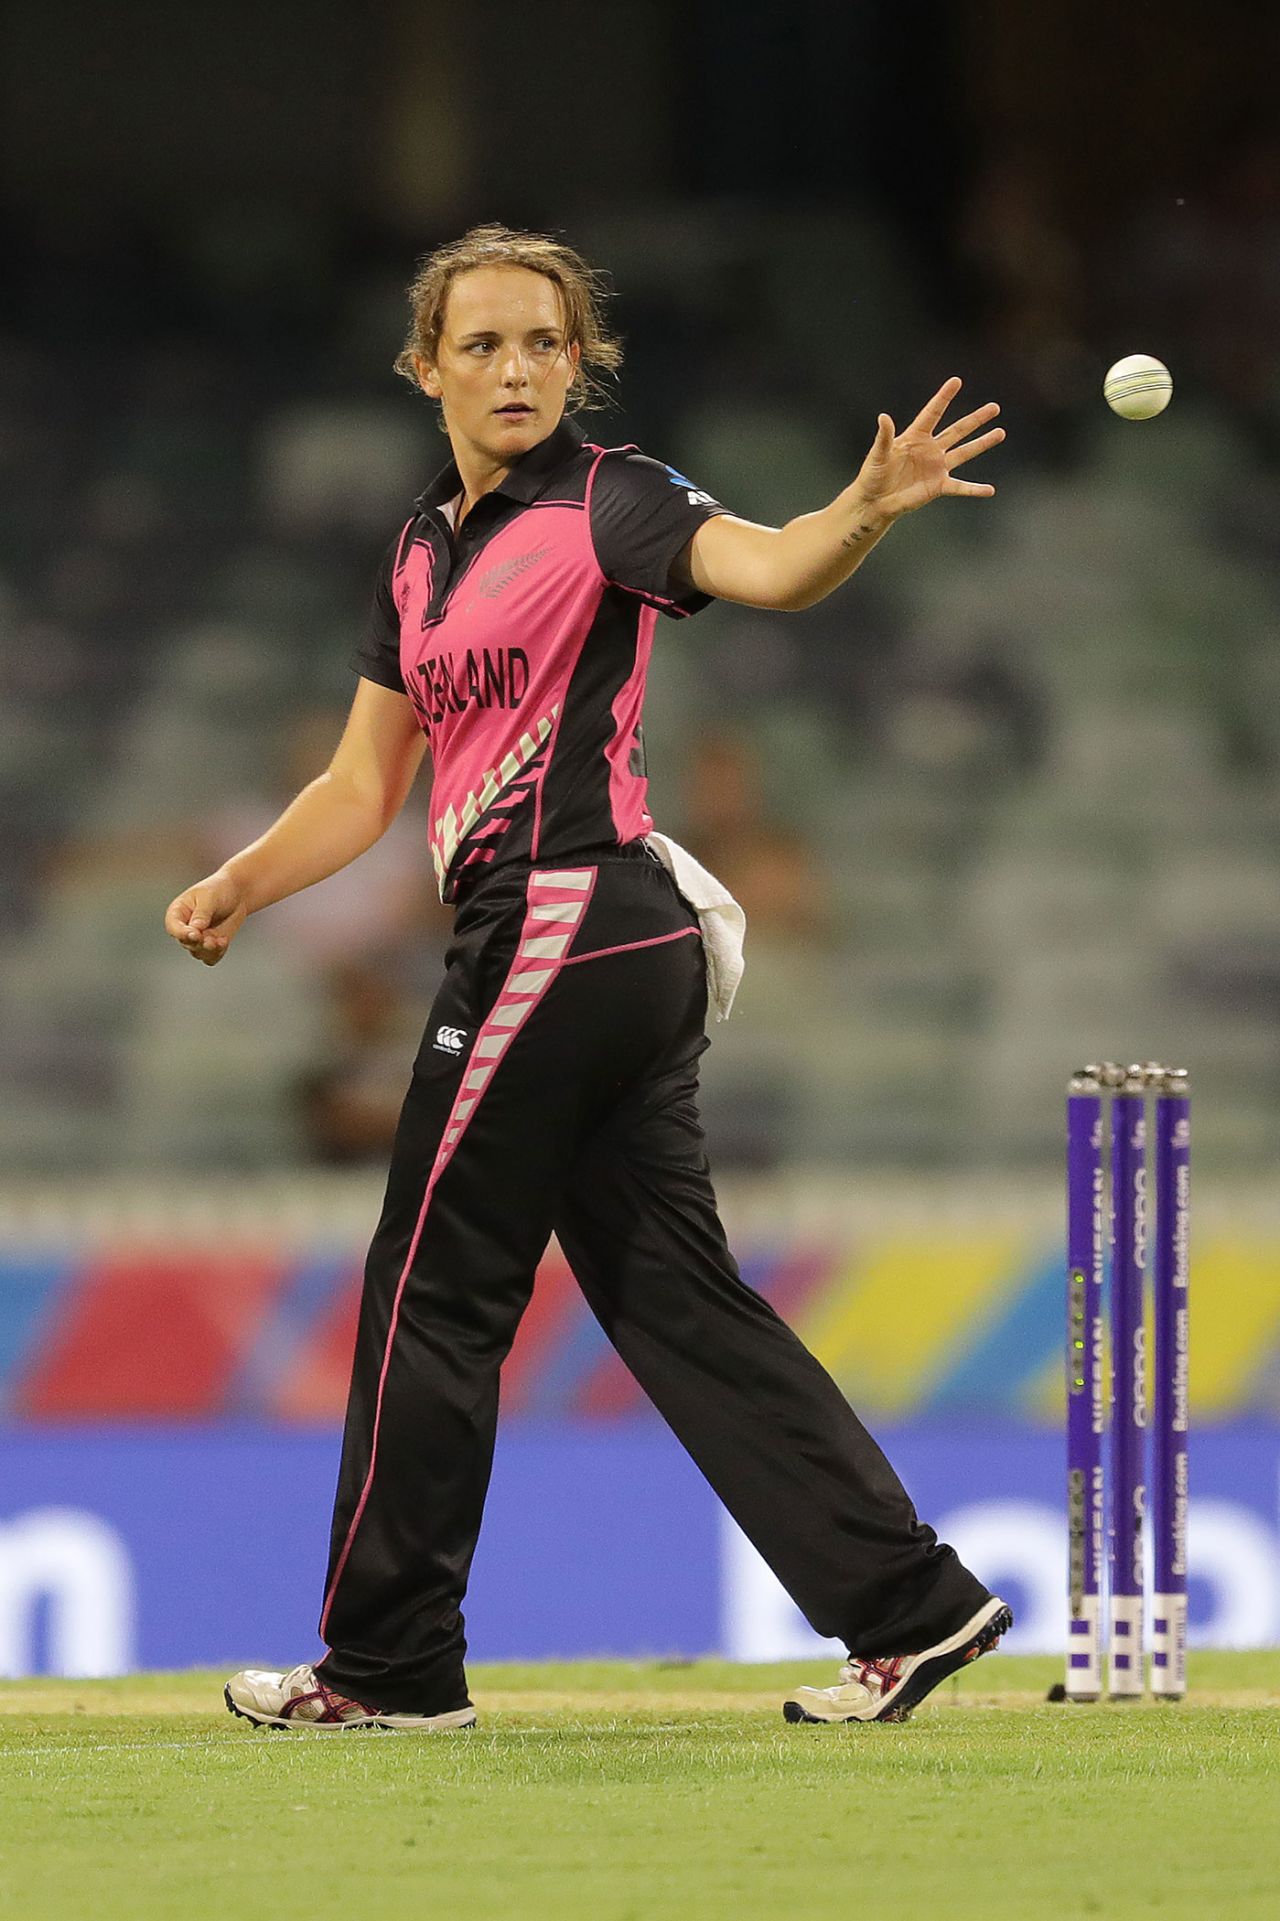 Amelia Kerr prepares to bowl another delivery, New Zealand v Sri Lanka, Women's World T20, February 22, 2020